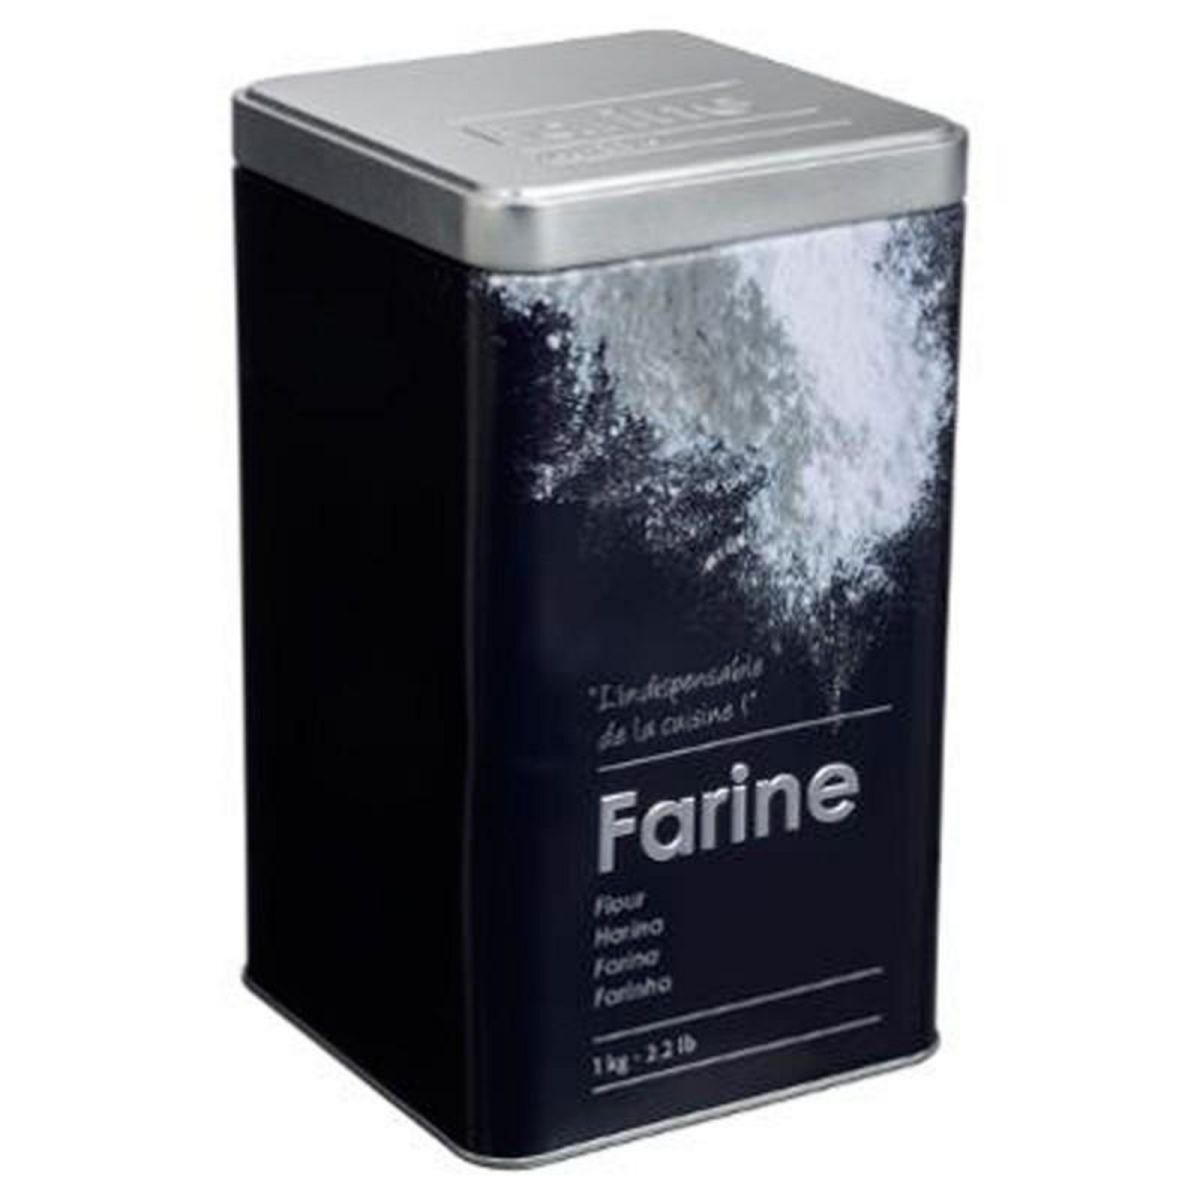  Boîte à Farine  Relief II  18cm Noir